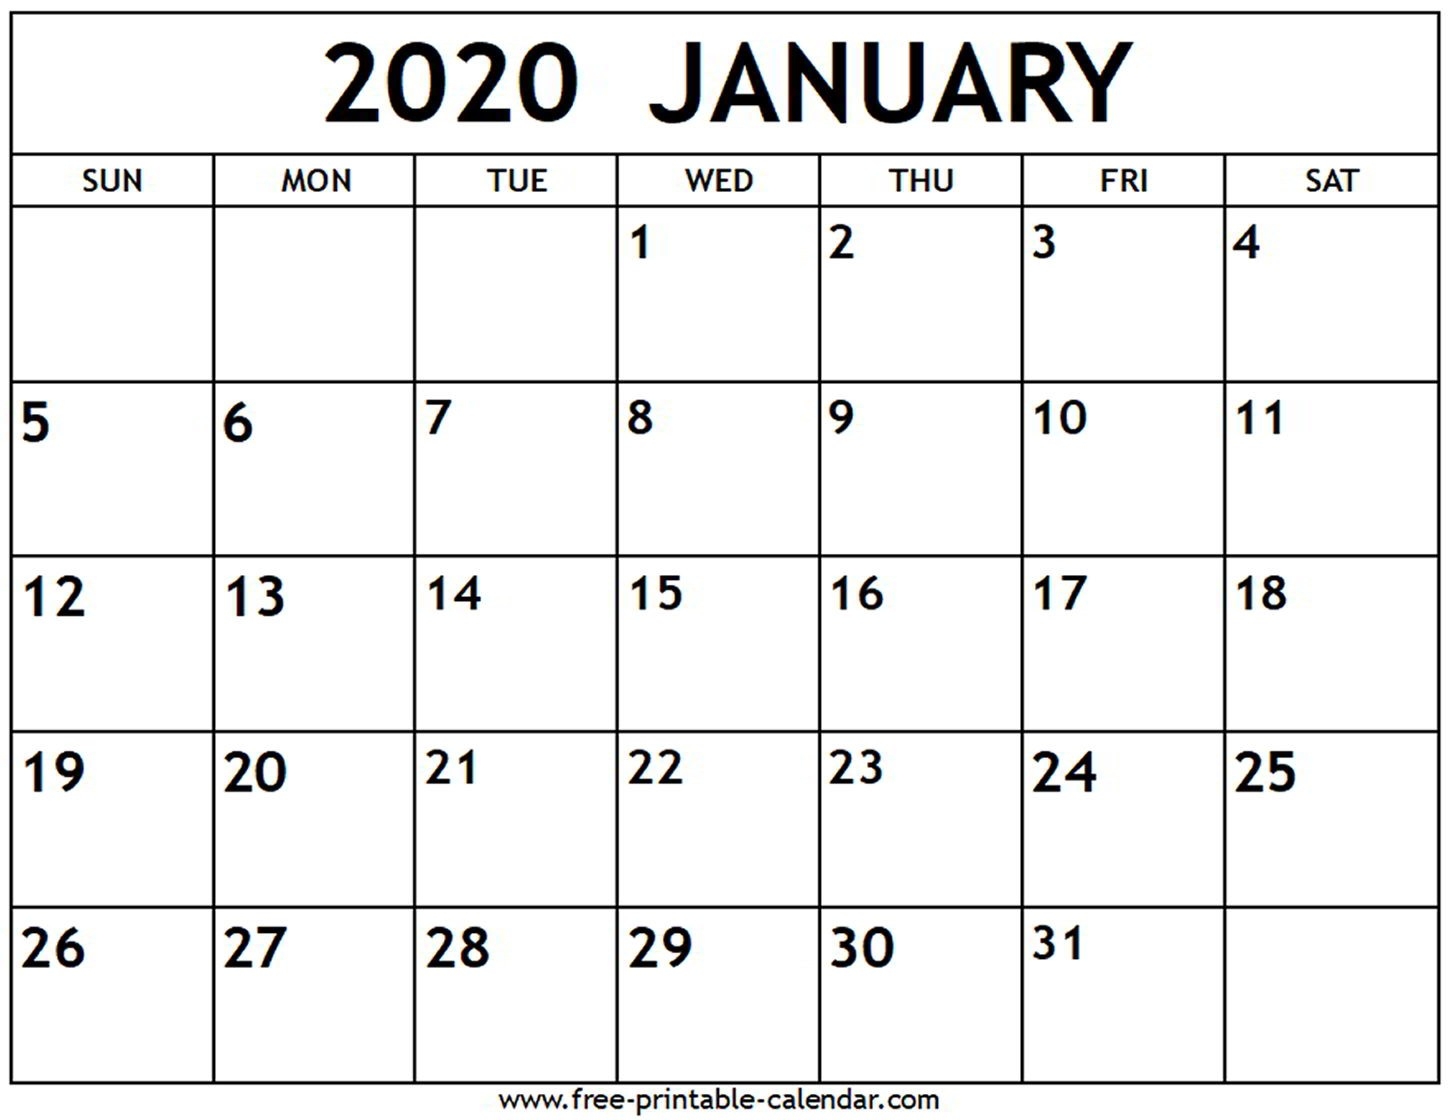 January 2020 Calendar - Free-Printable-Calendar-January 2020 Calendar Free